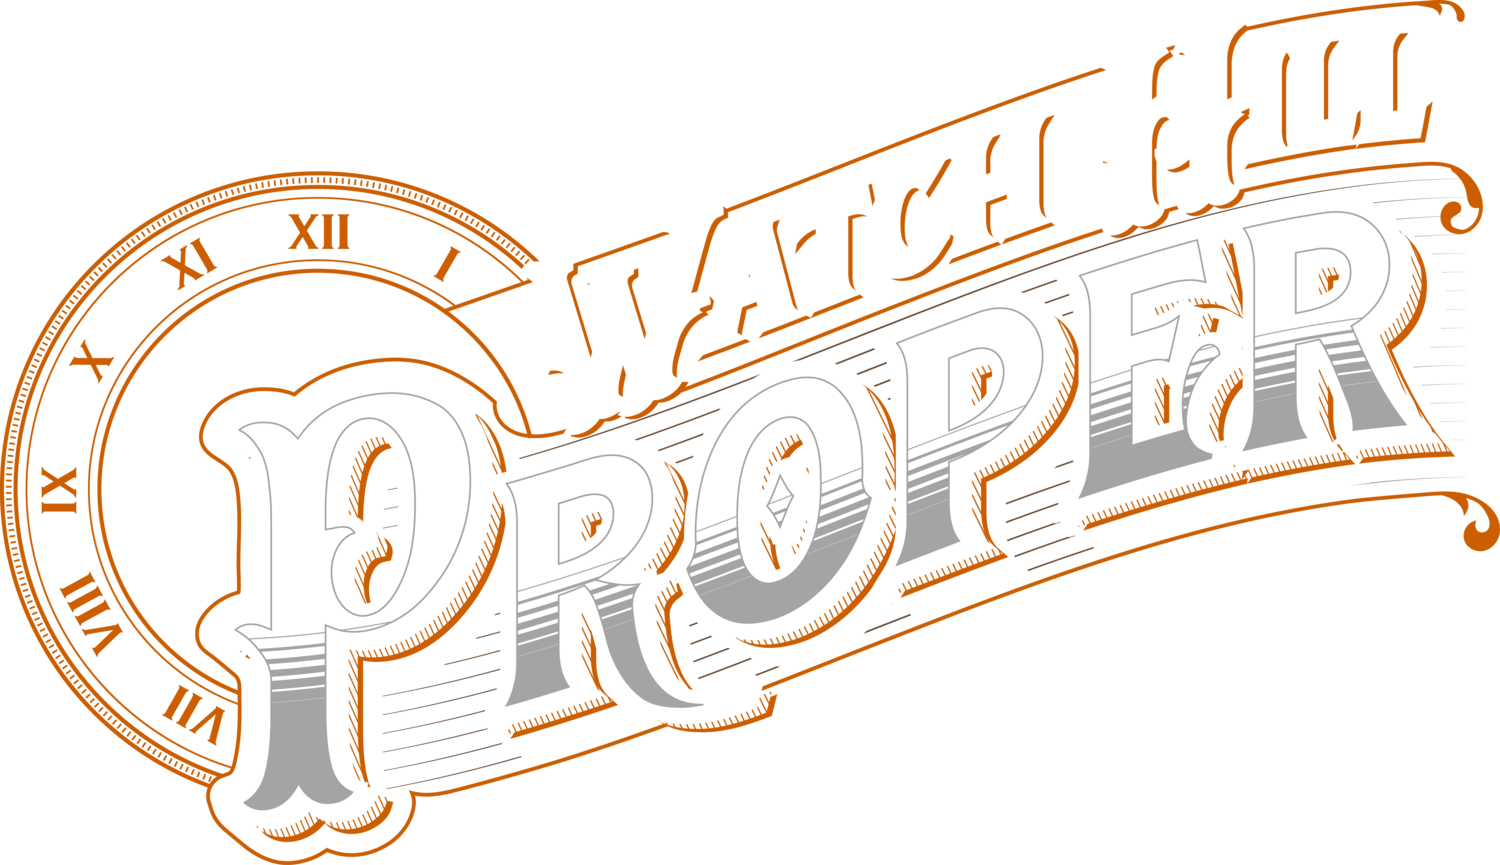 Watch Hill Proper